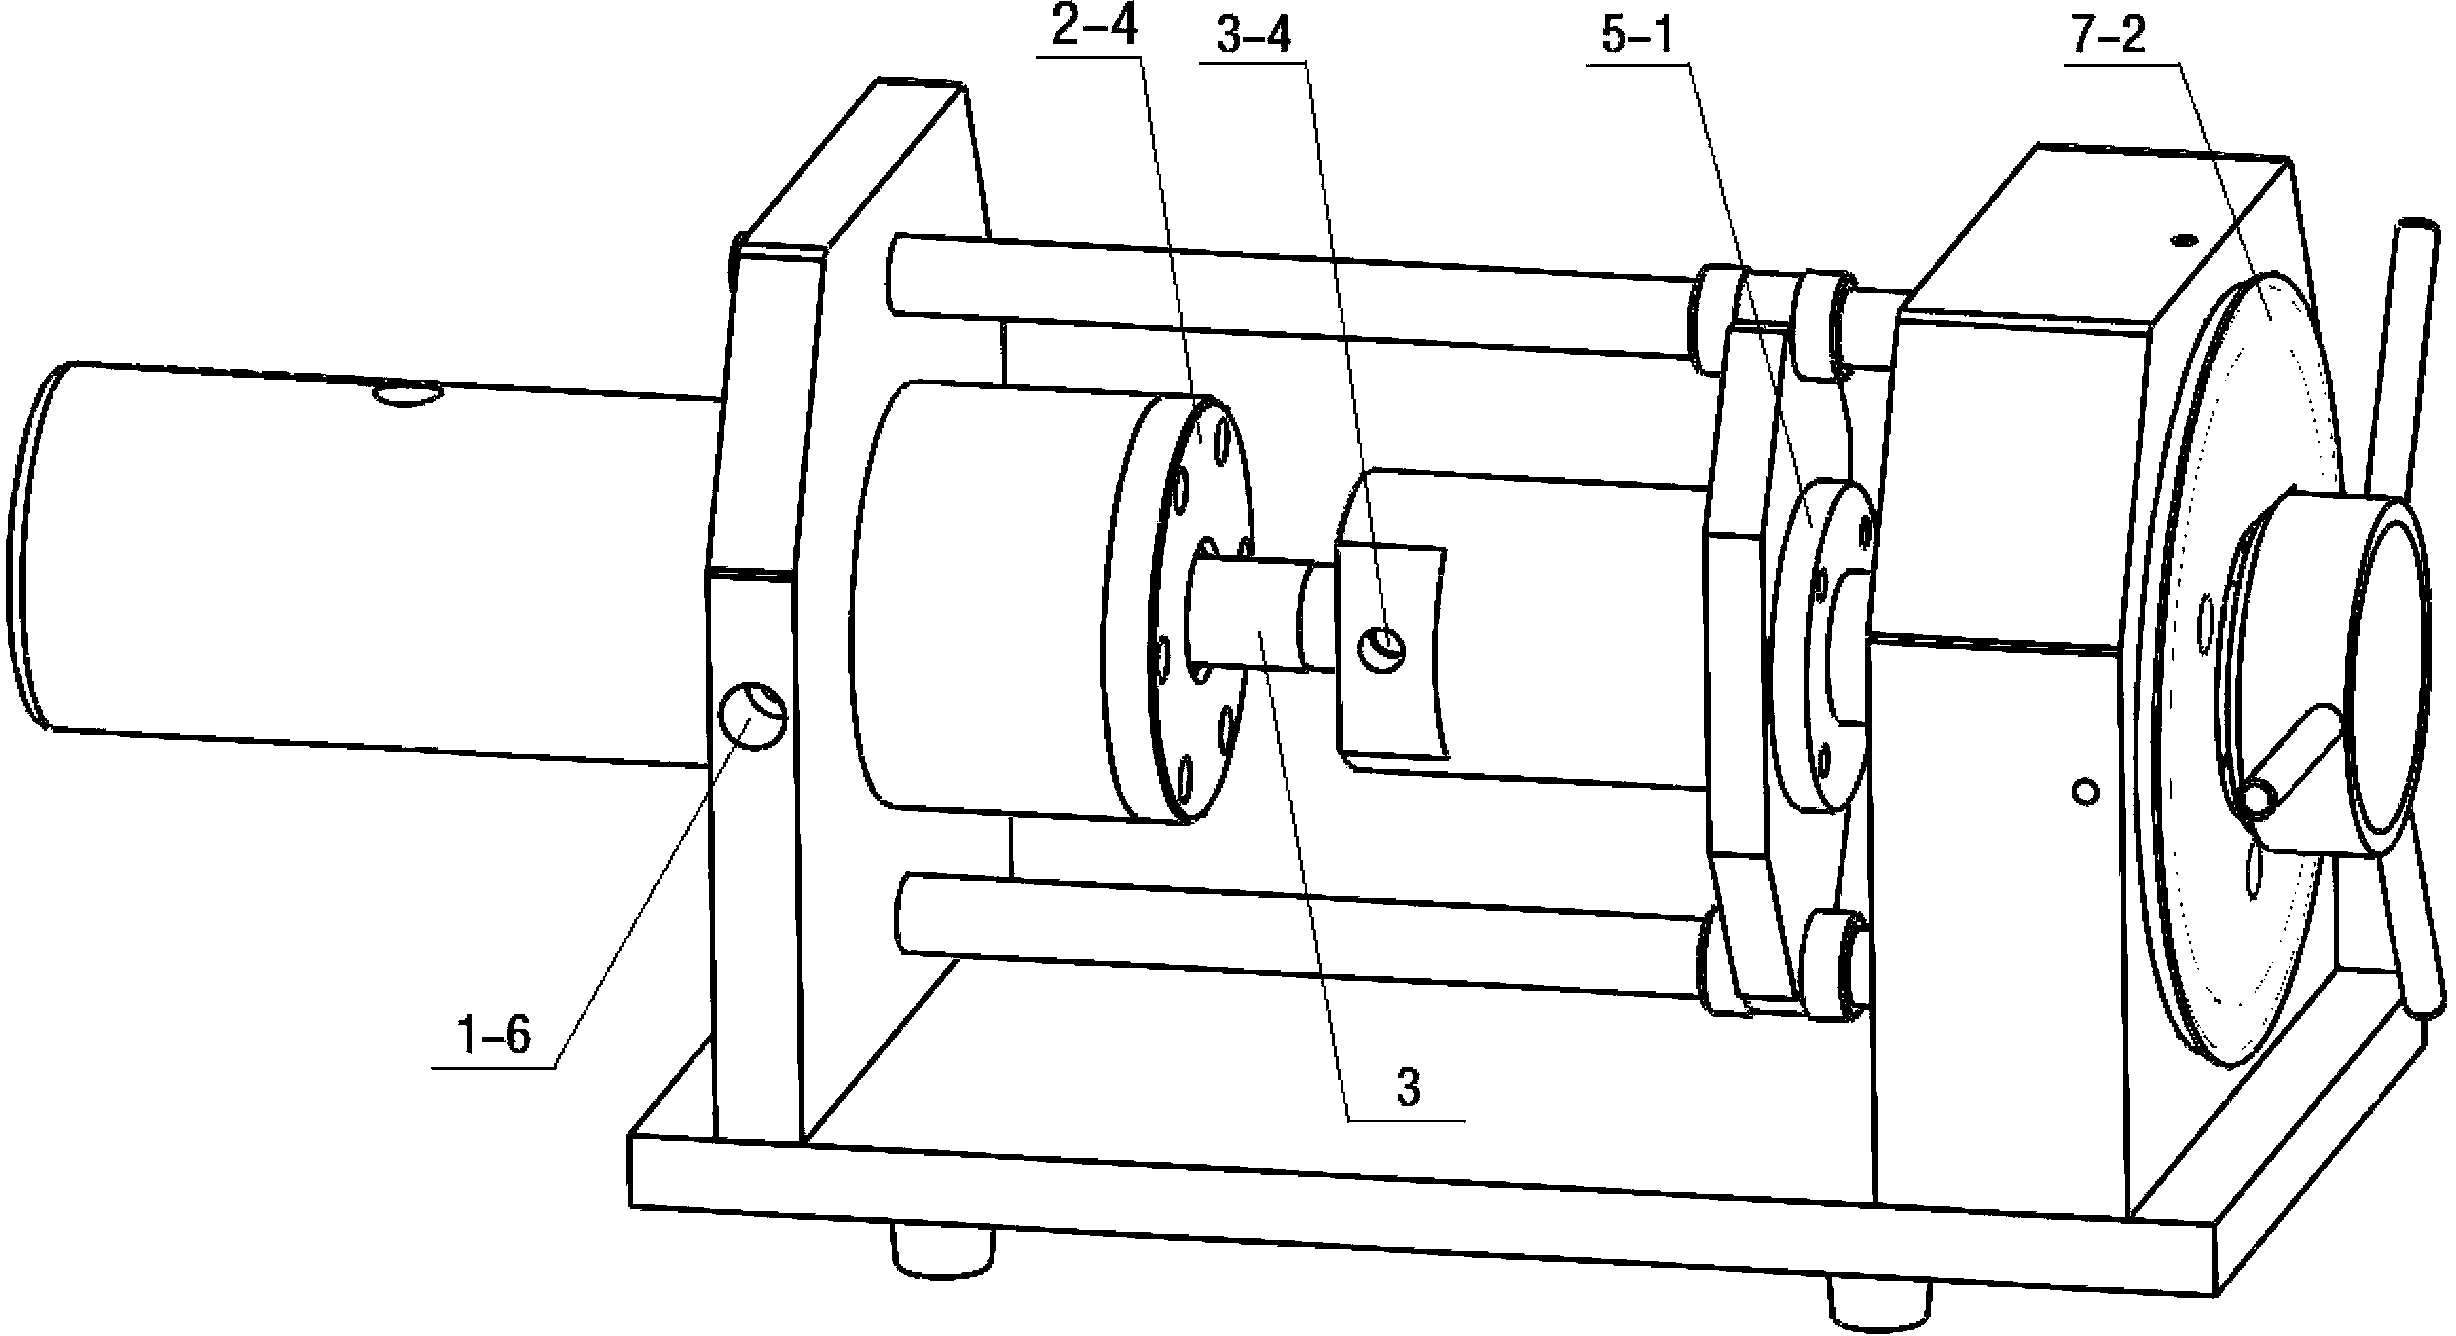 Manual and precision plunger pressuring pump